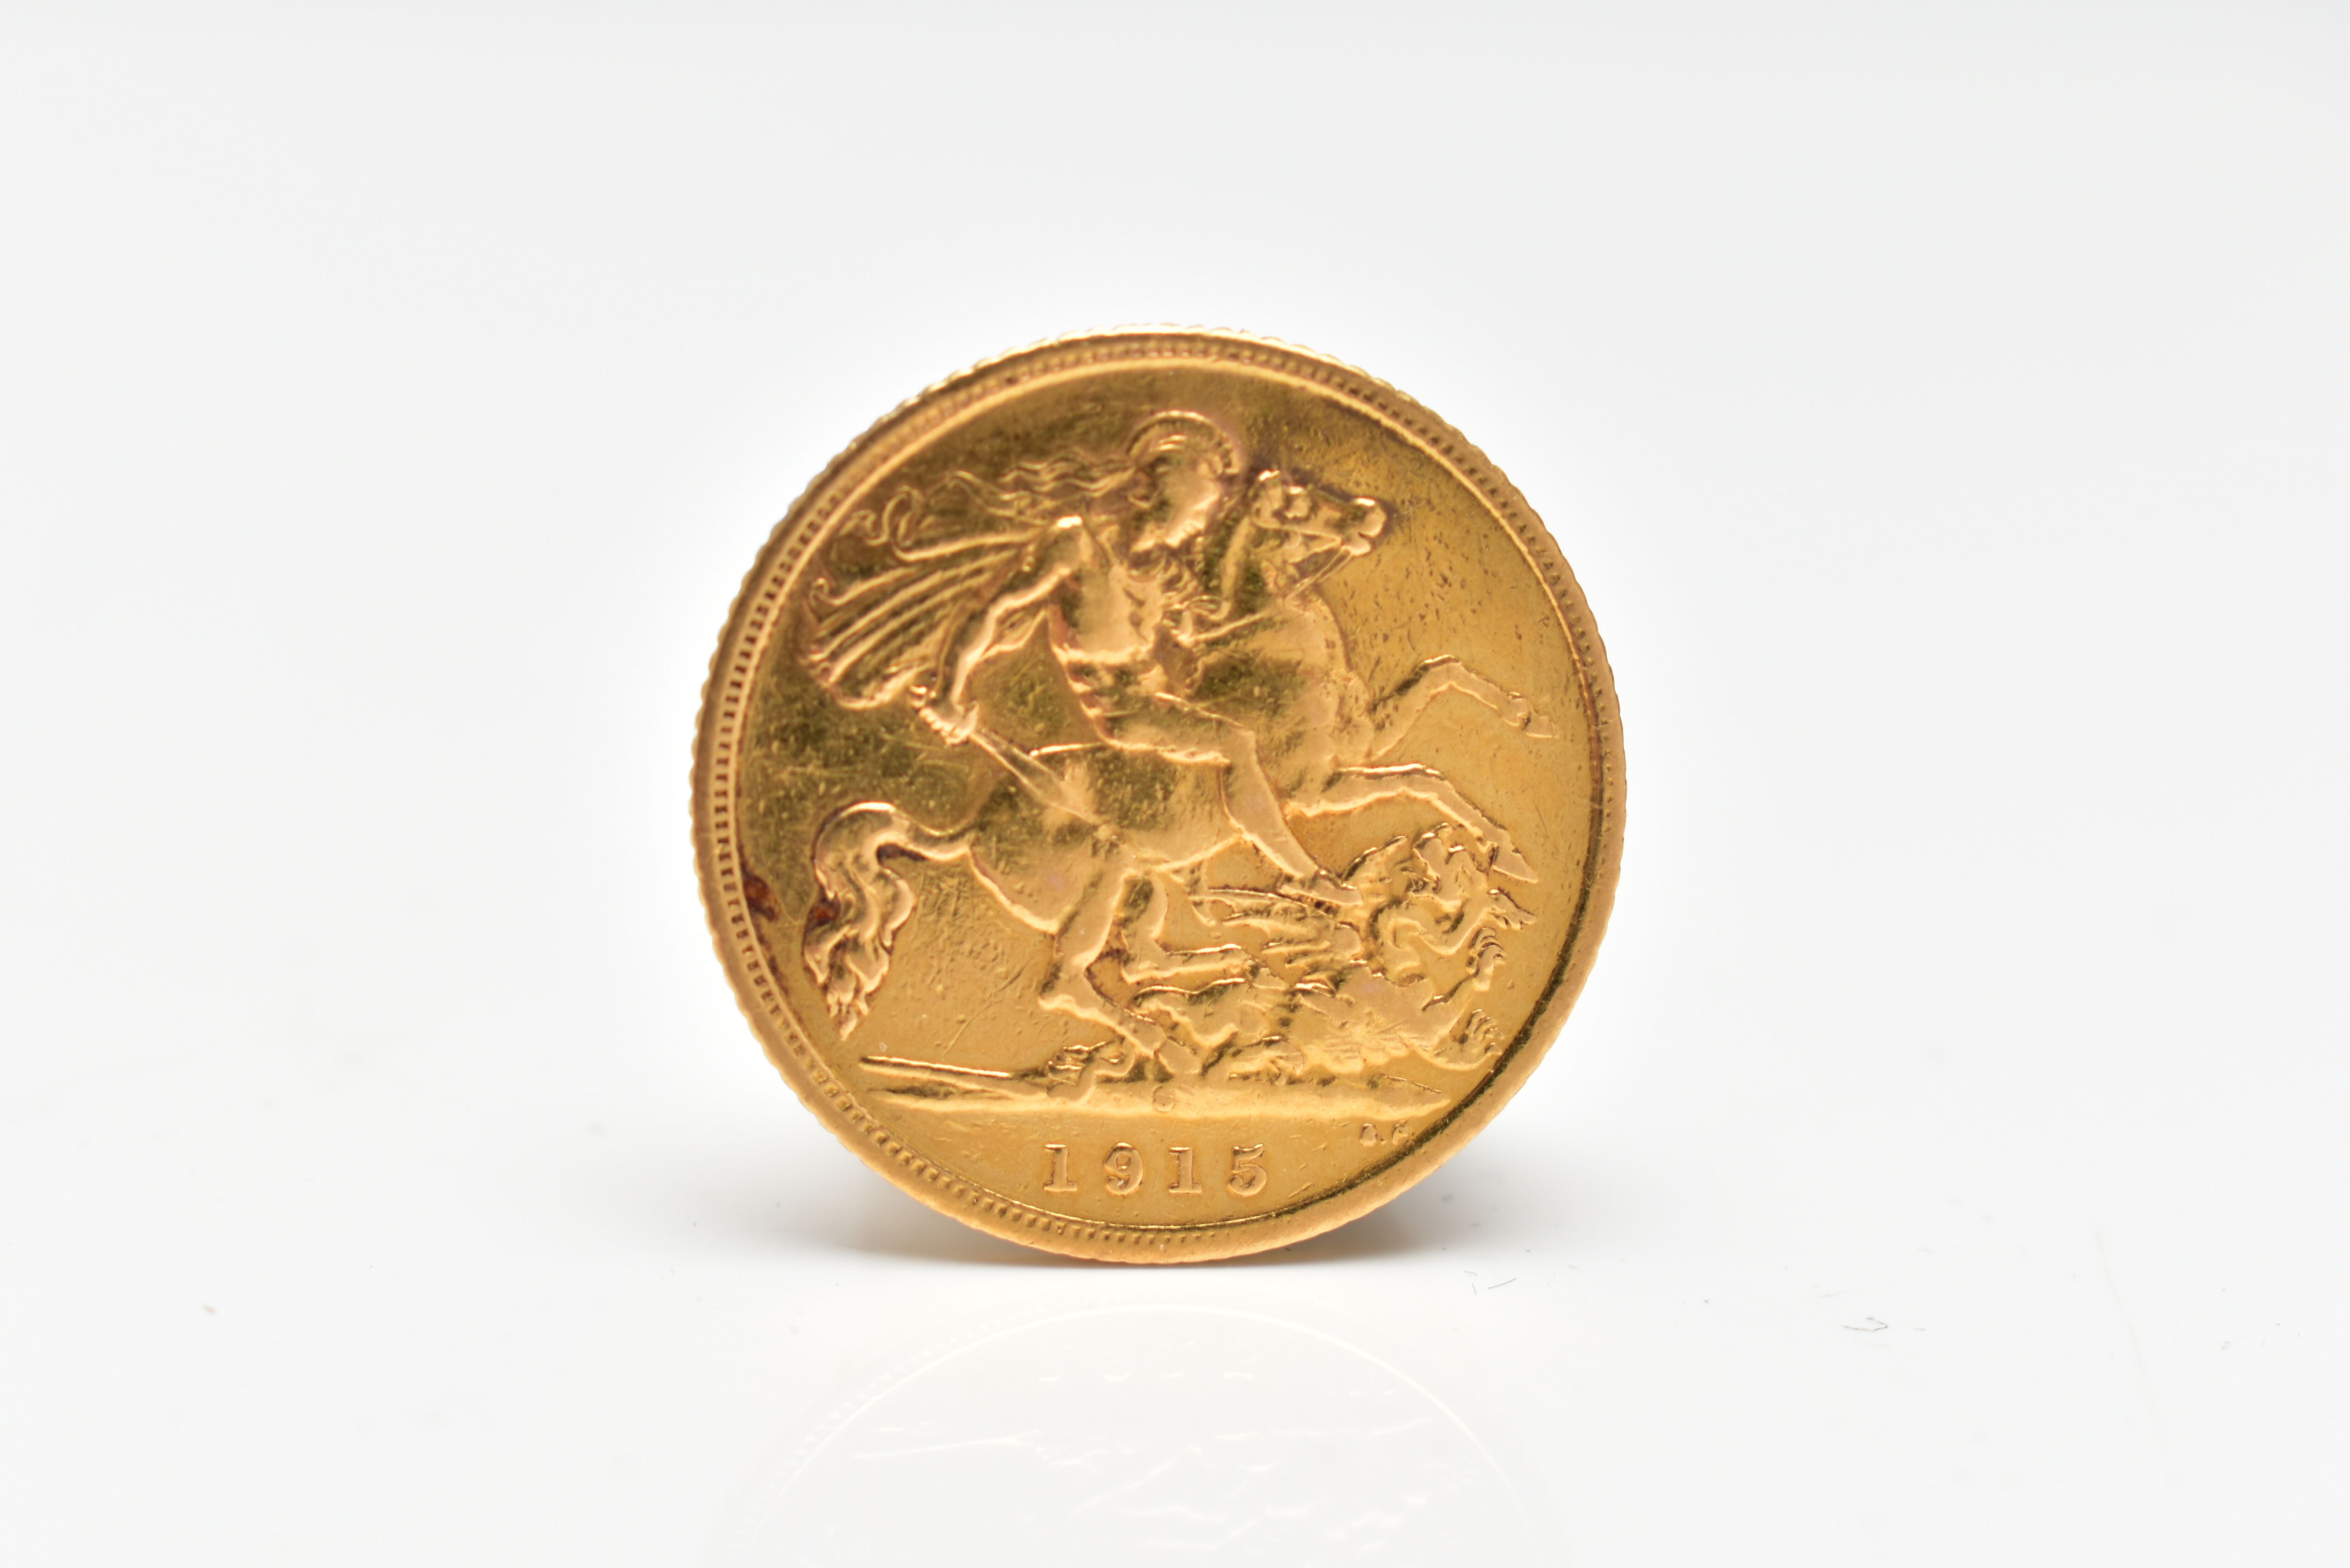 A GEORGE V HALF SOVEREIGN COIN, obverse depicting George V, reverse displaying George and the